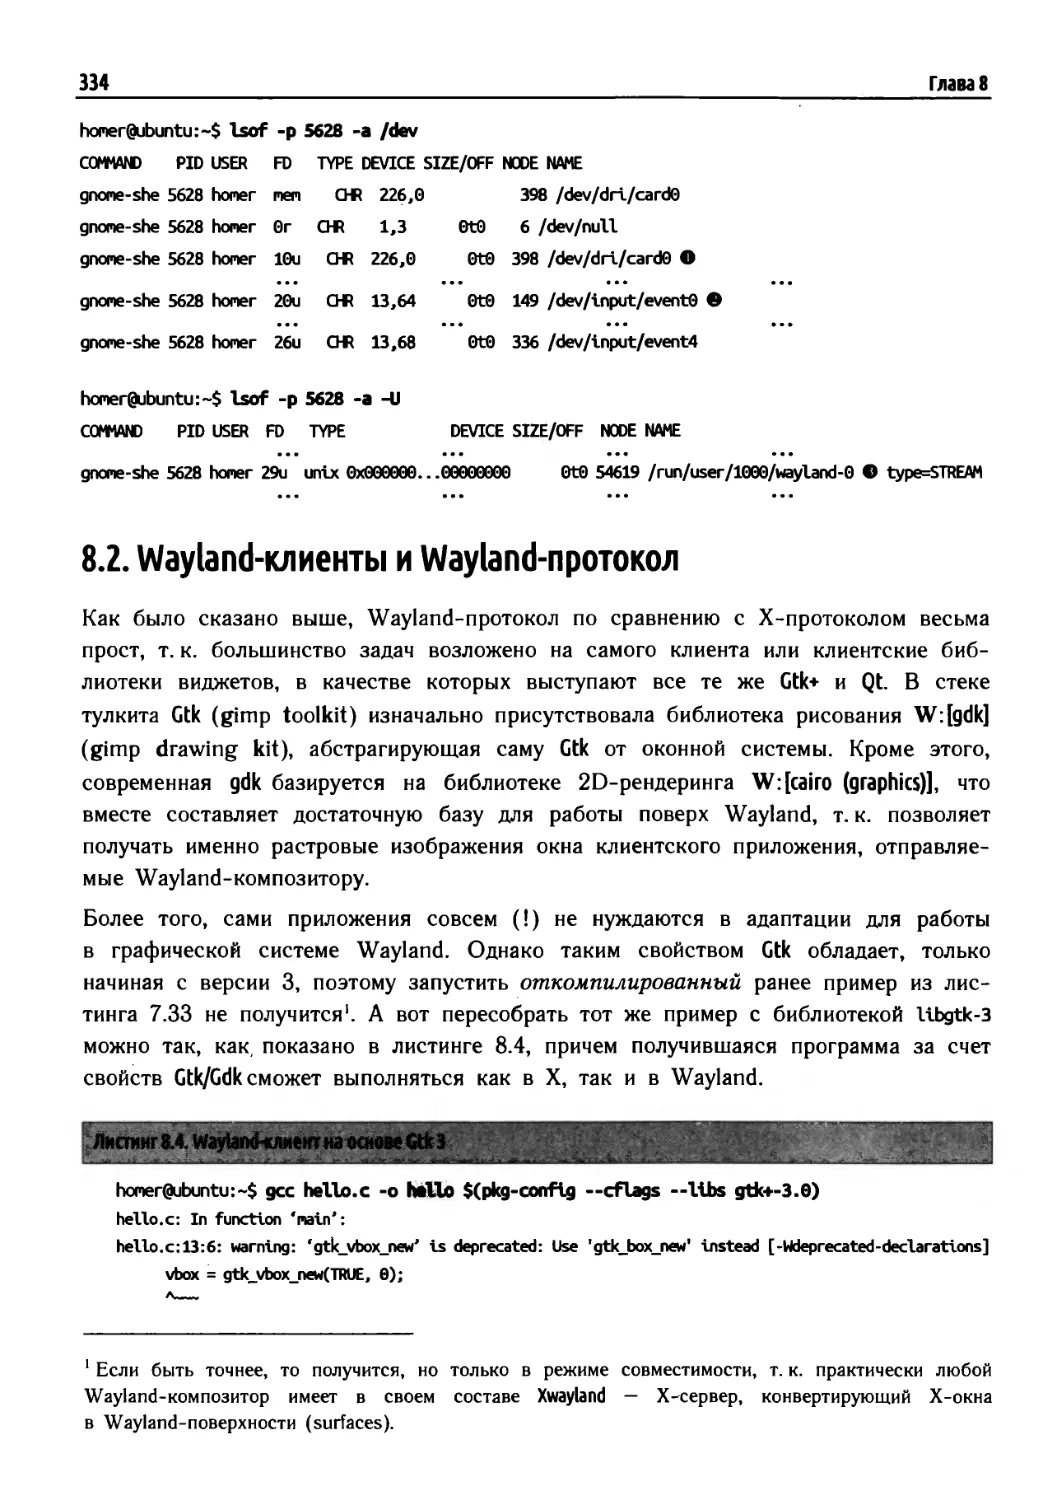 8.2. Wayland-клиенты и Wayland-протокол